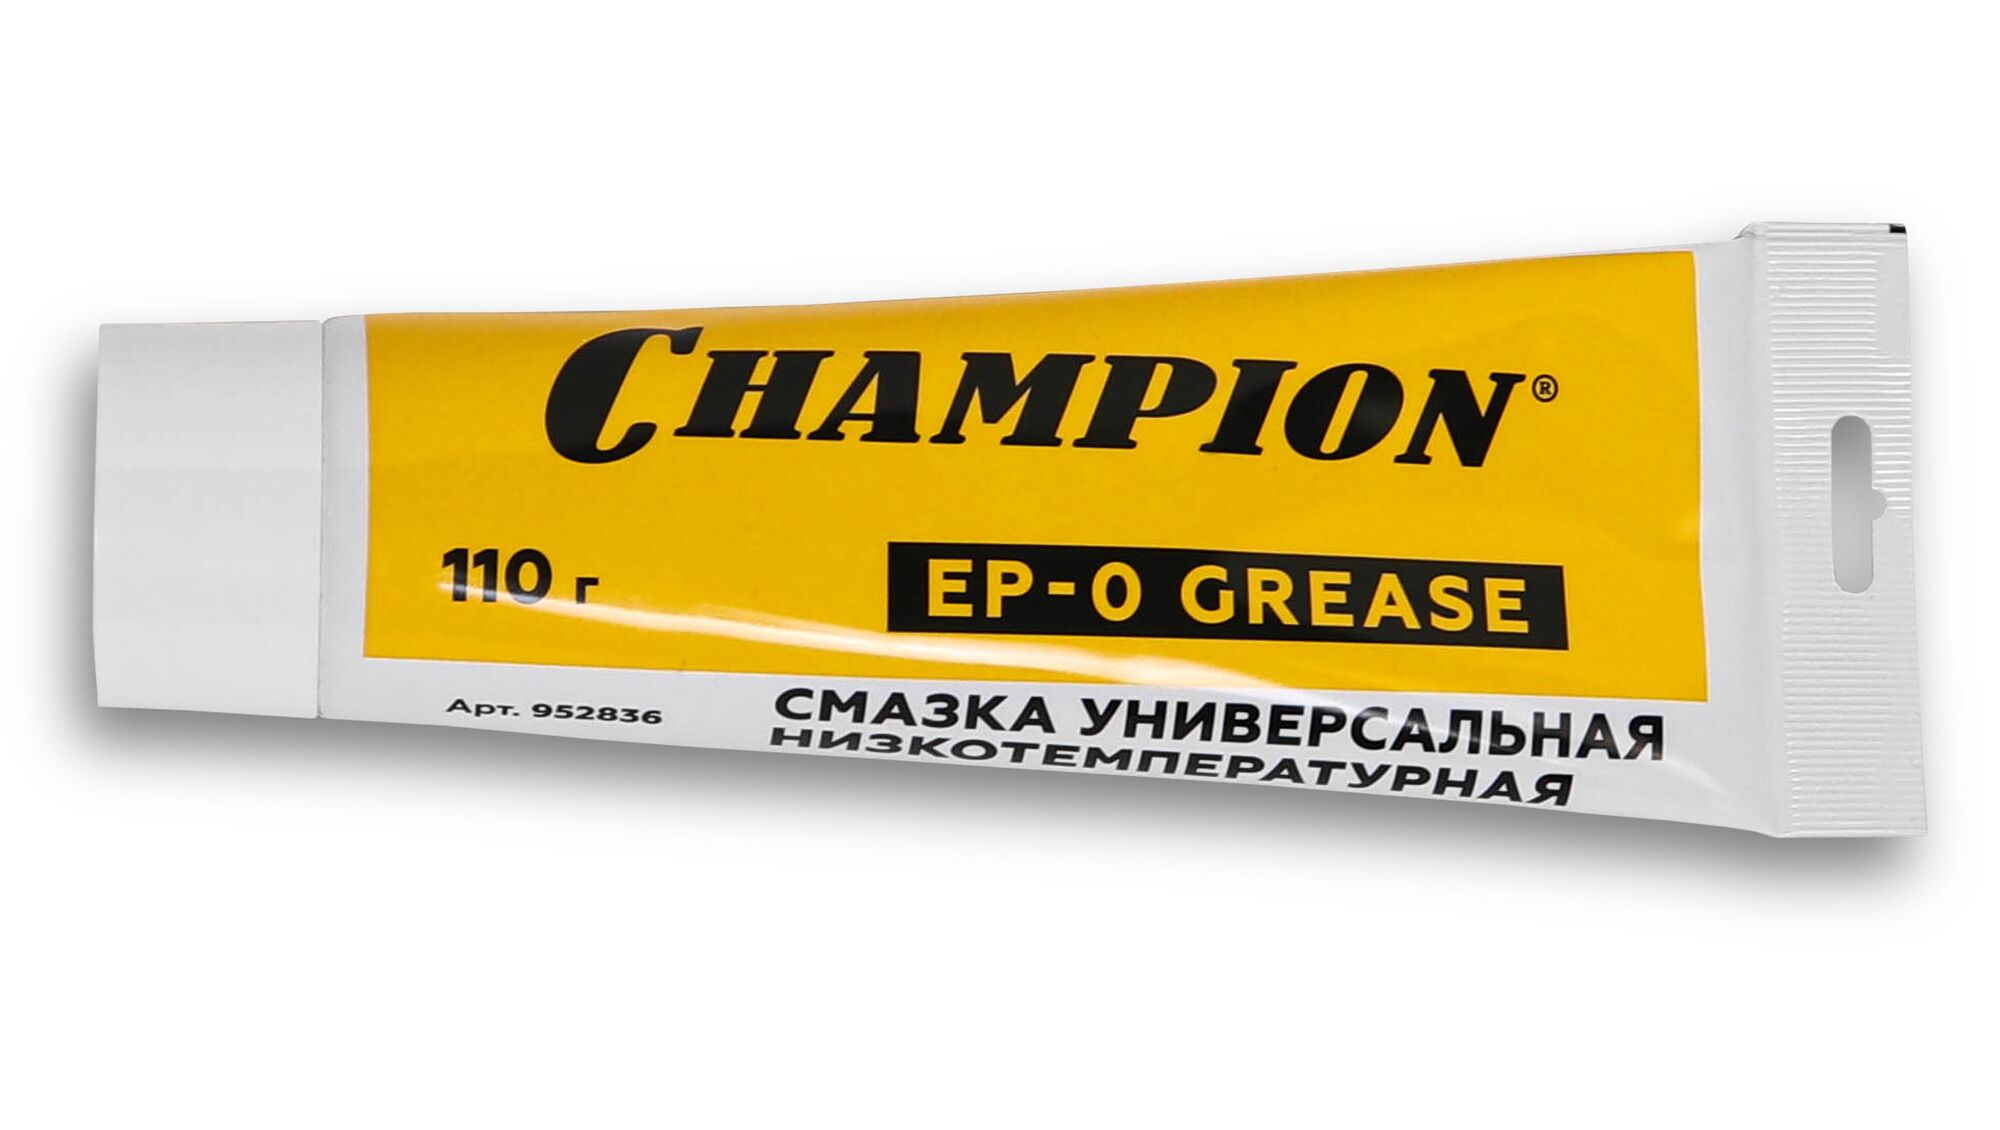 Смазка универсальная CHAMPION EP-0, 110 г низкотемпературная 952836